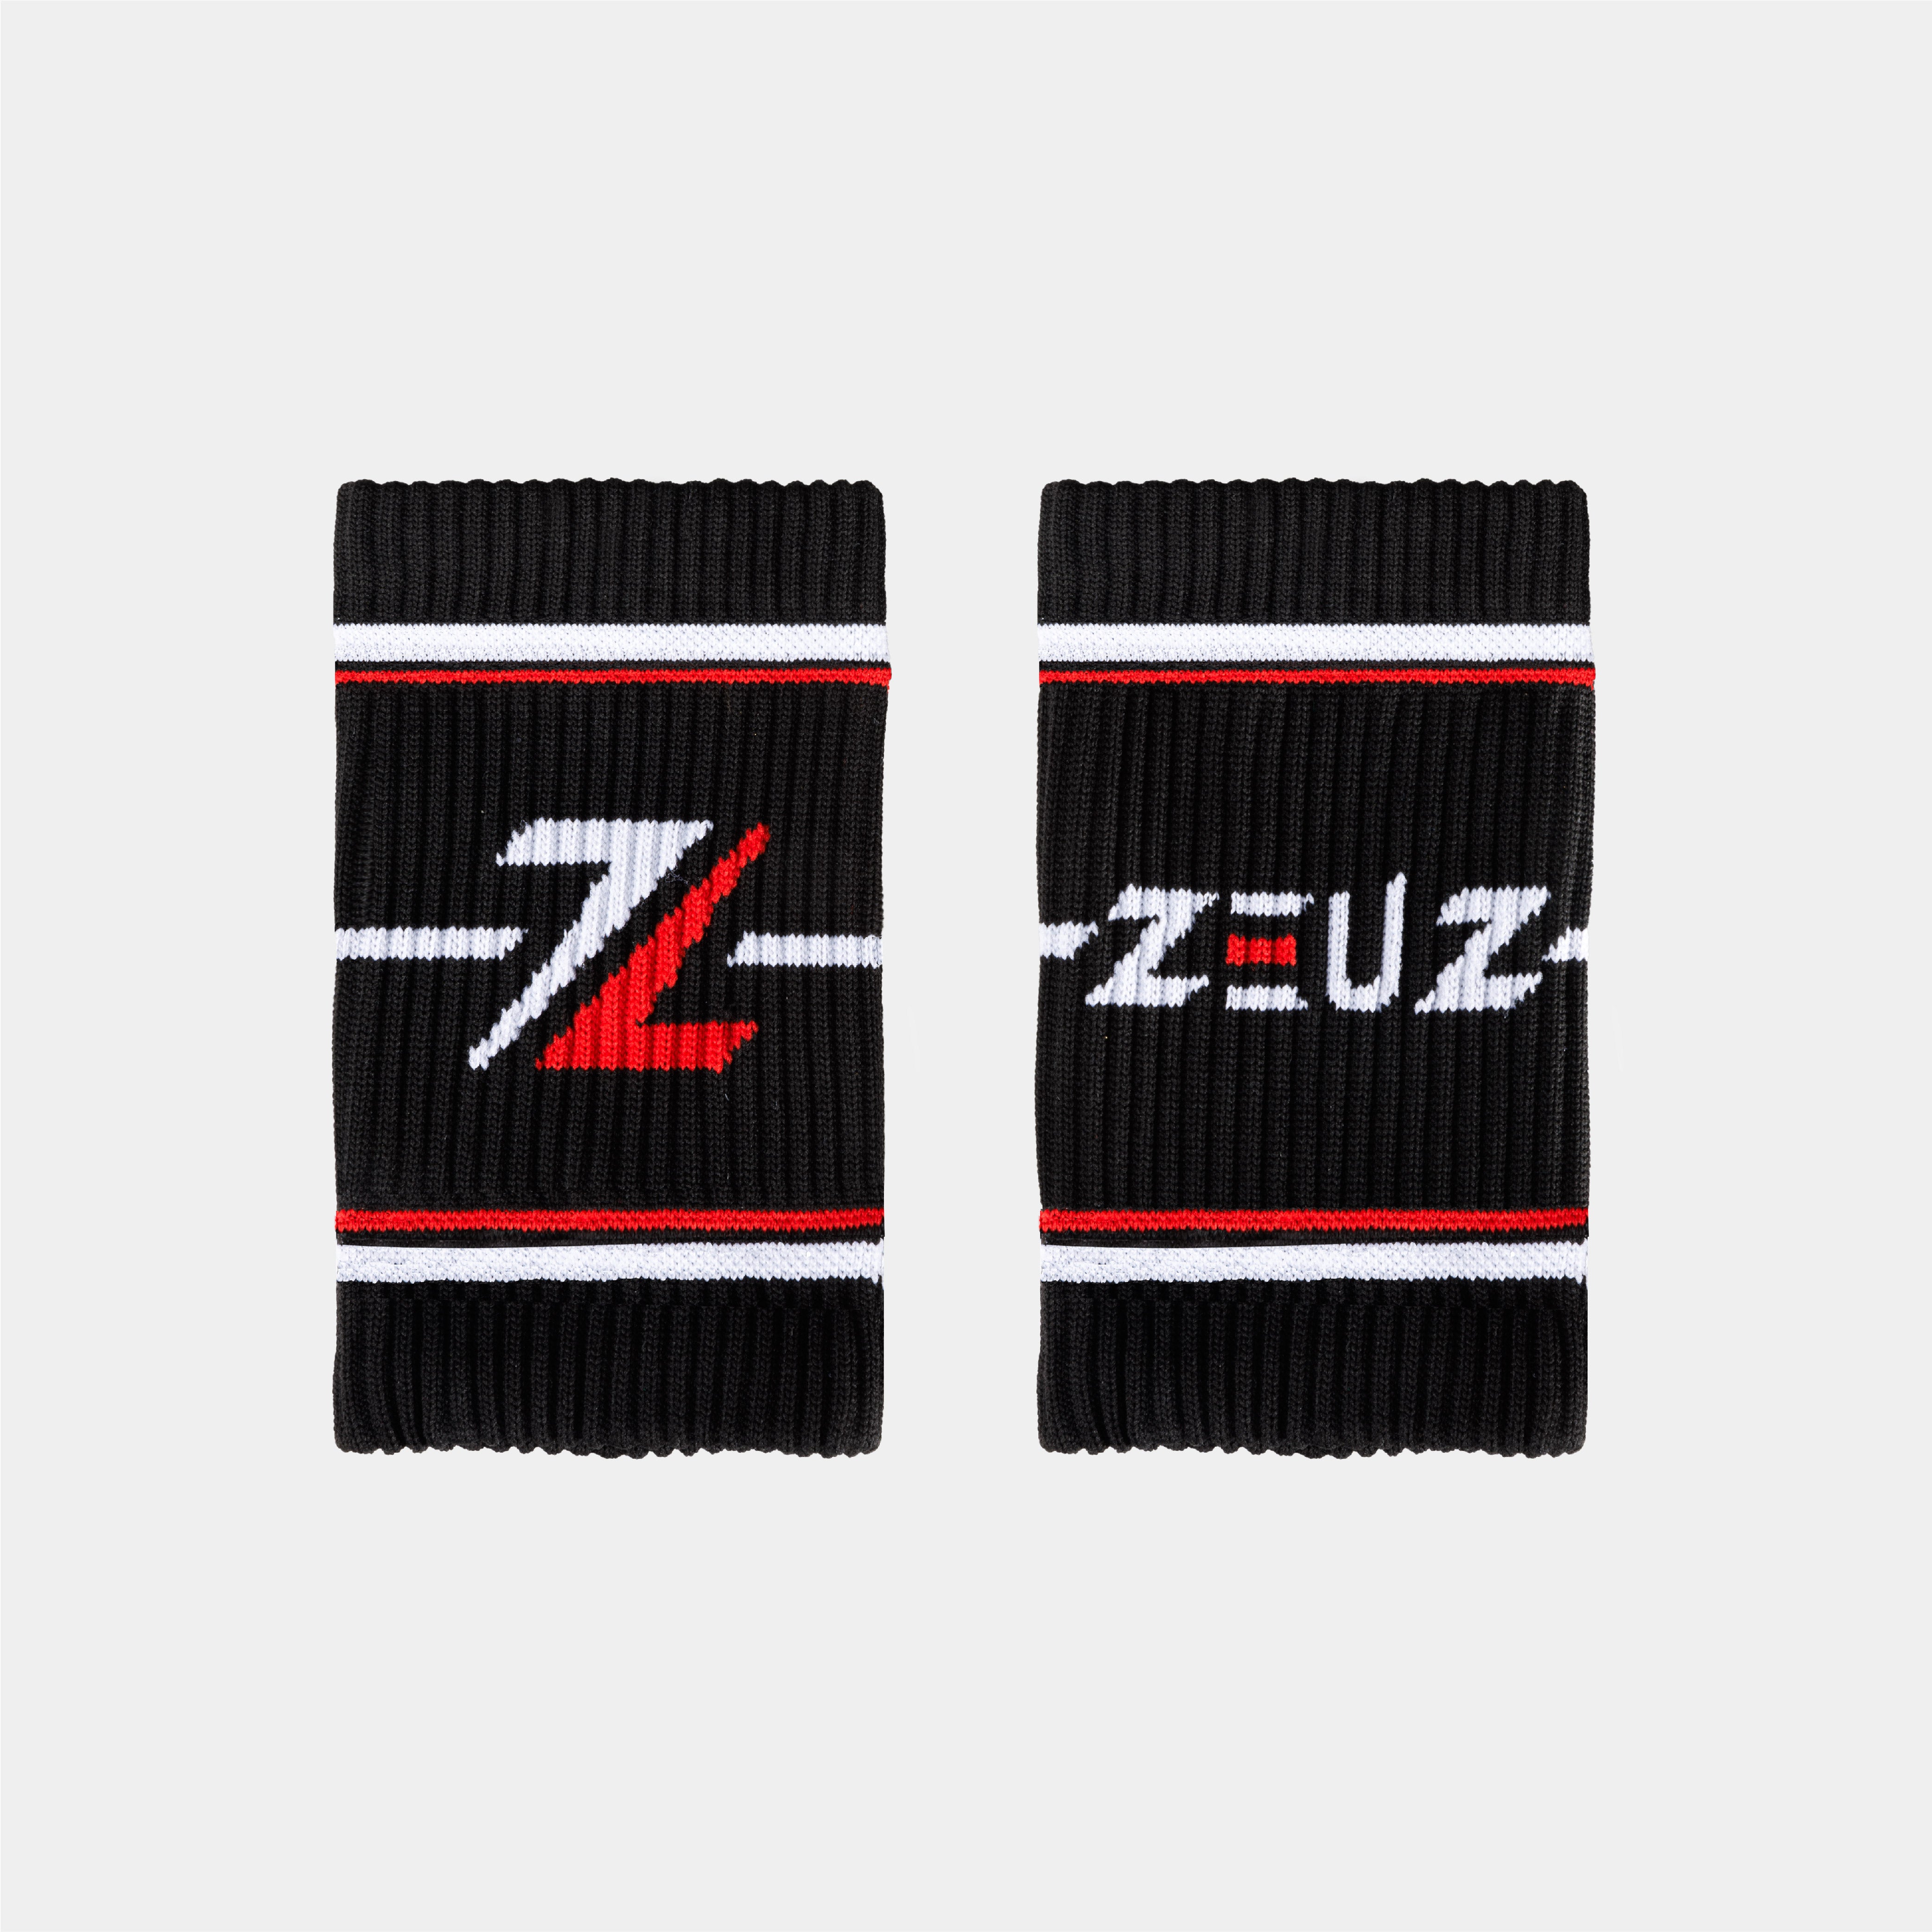 ZEUZ Ultra Fitnes Grips - No Chalk